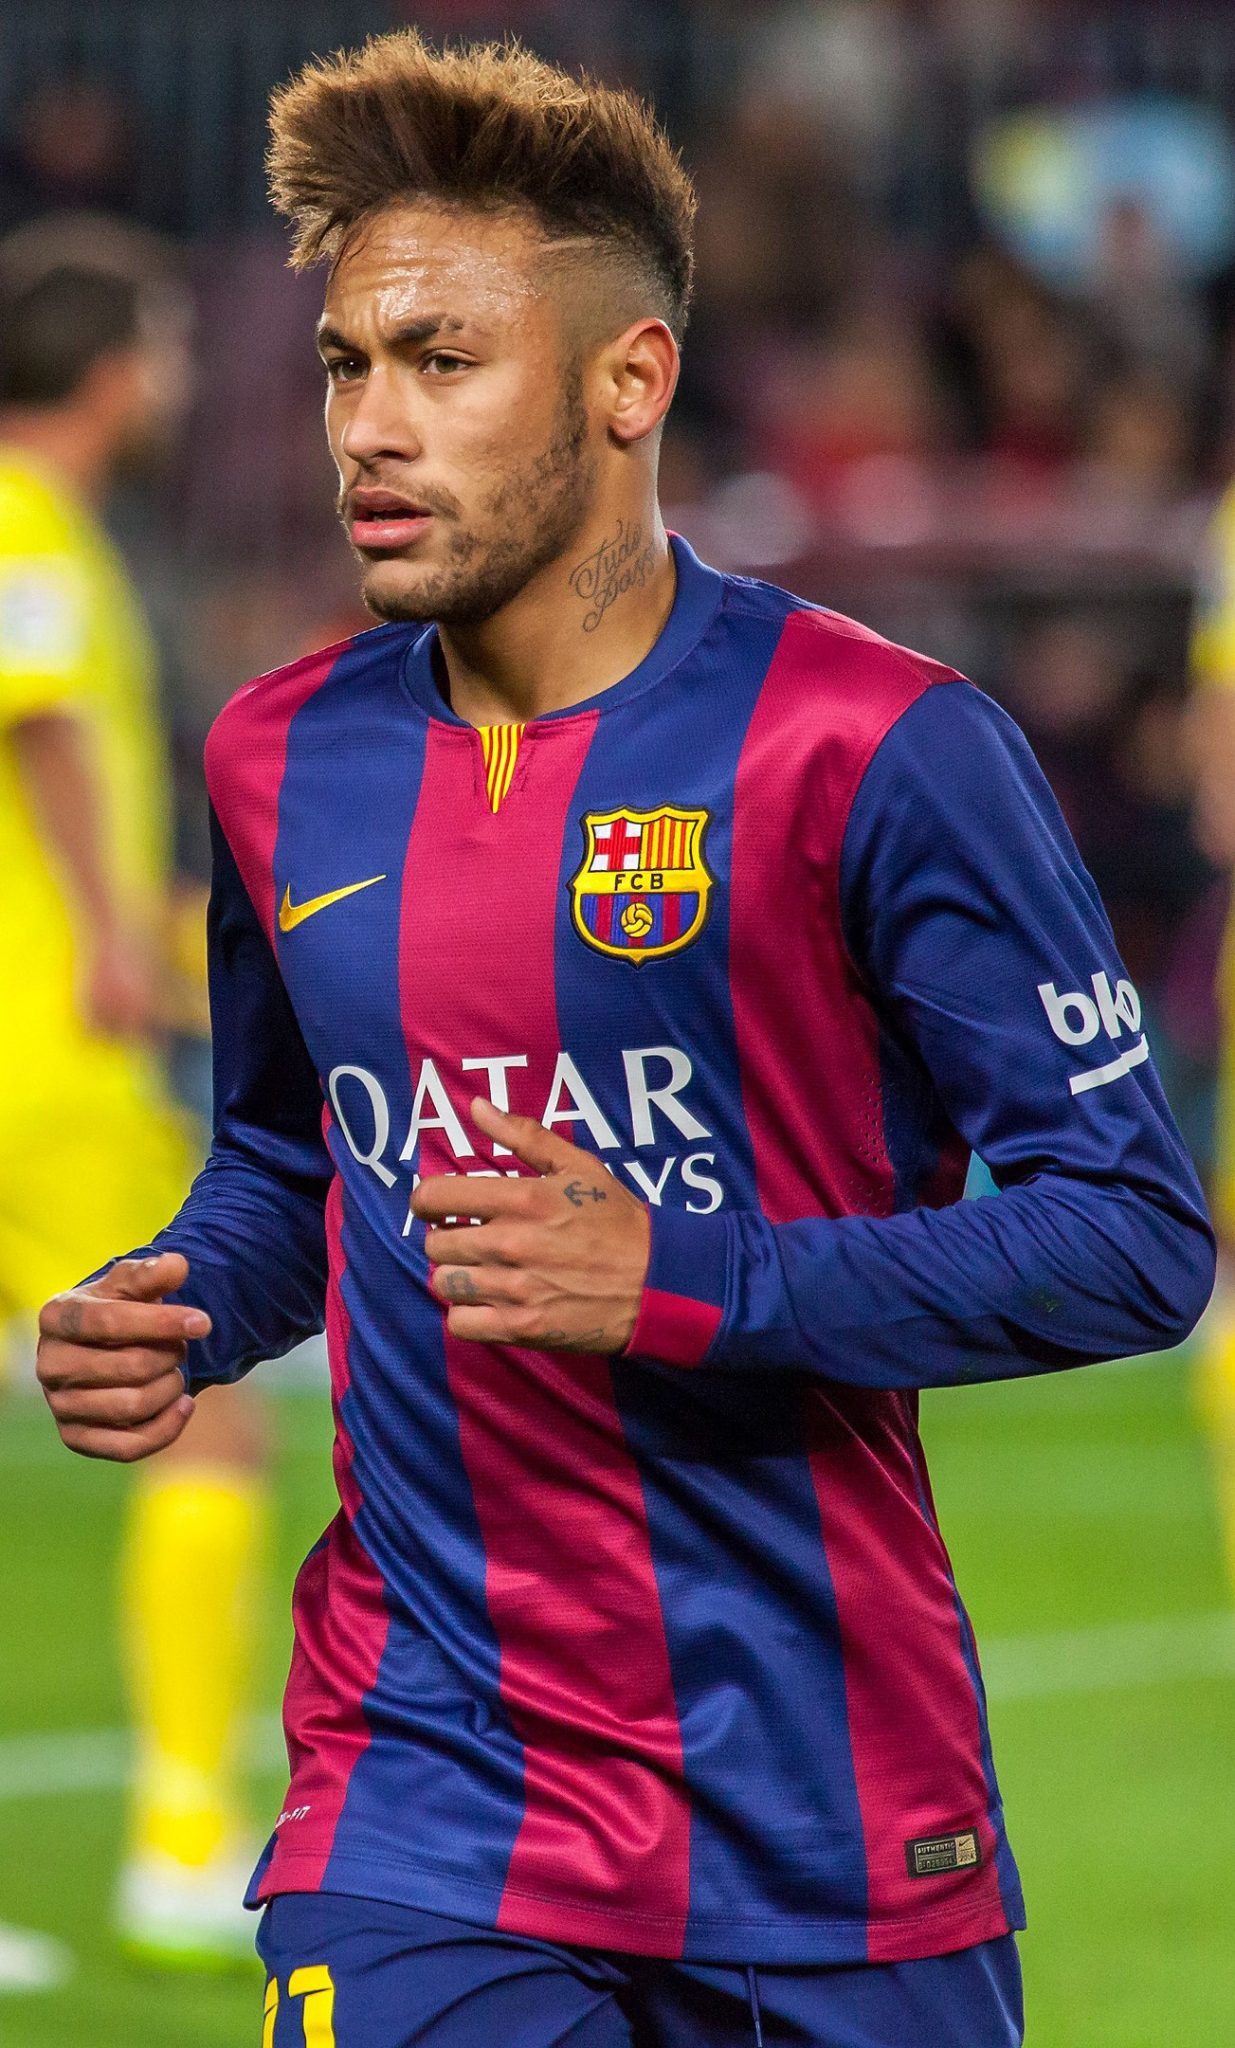 biography of football player neymar